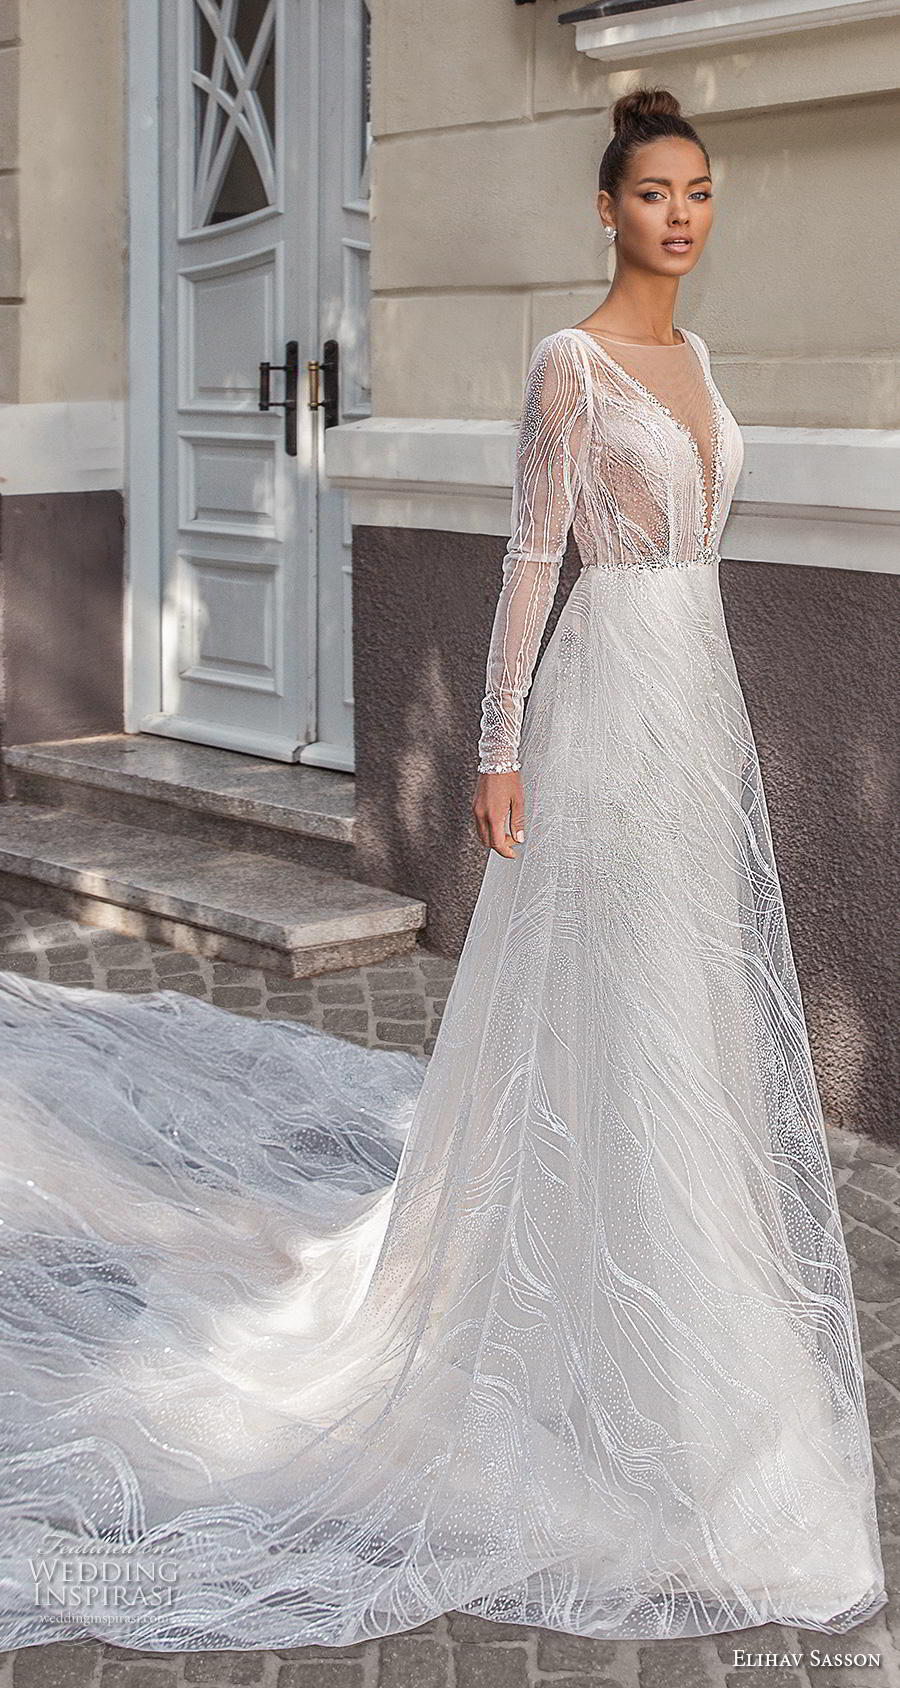 elihav sasson 2019 bridal long sleeves illusion bateau deep v neck full embellishment glitzy elegant a  line wedding dress keyhole back chapel train (13) mv